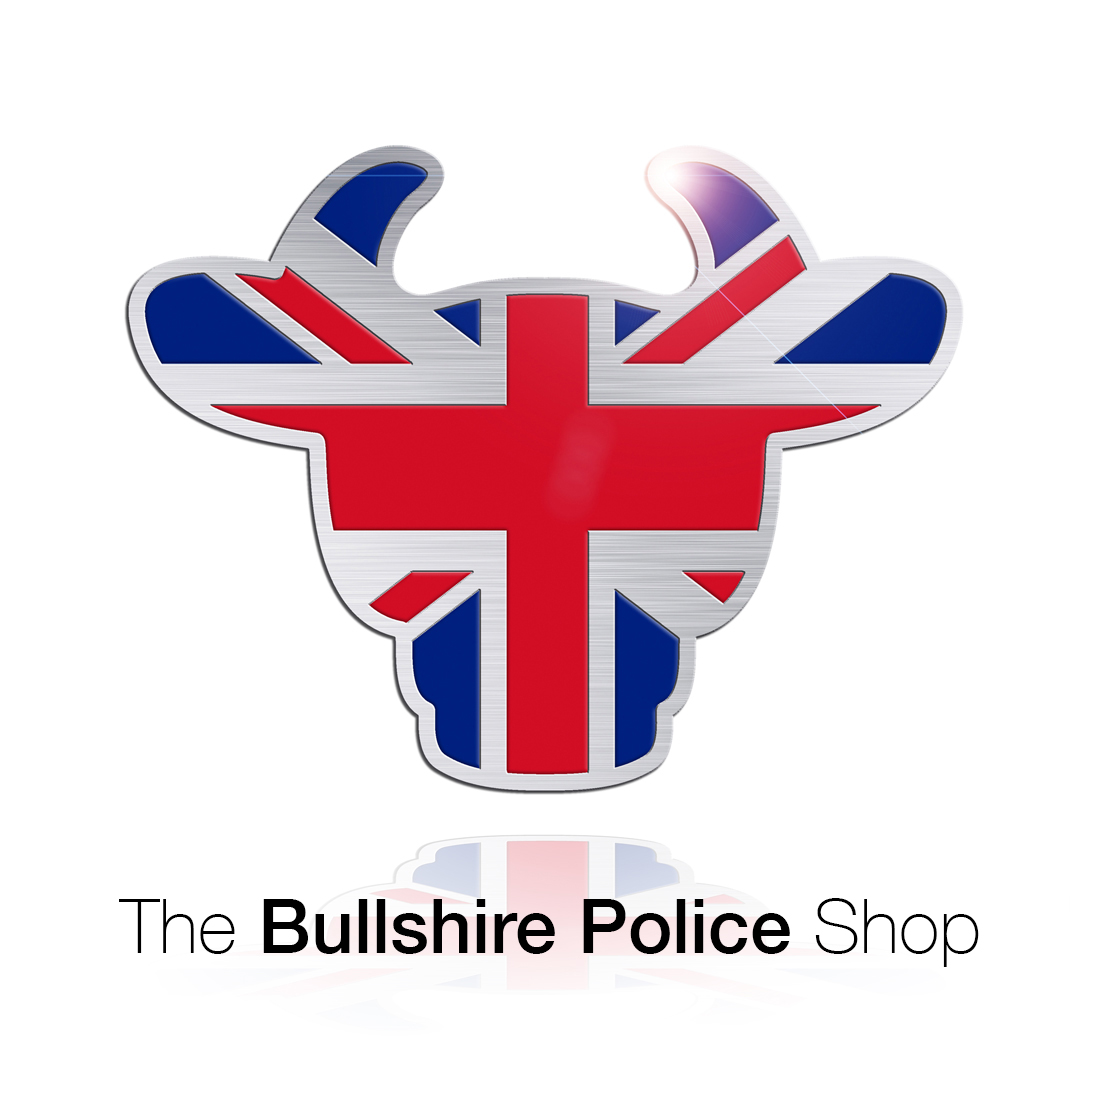 The Bullshire Police Shop